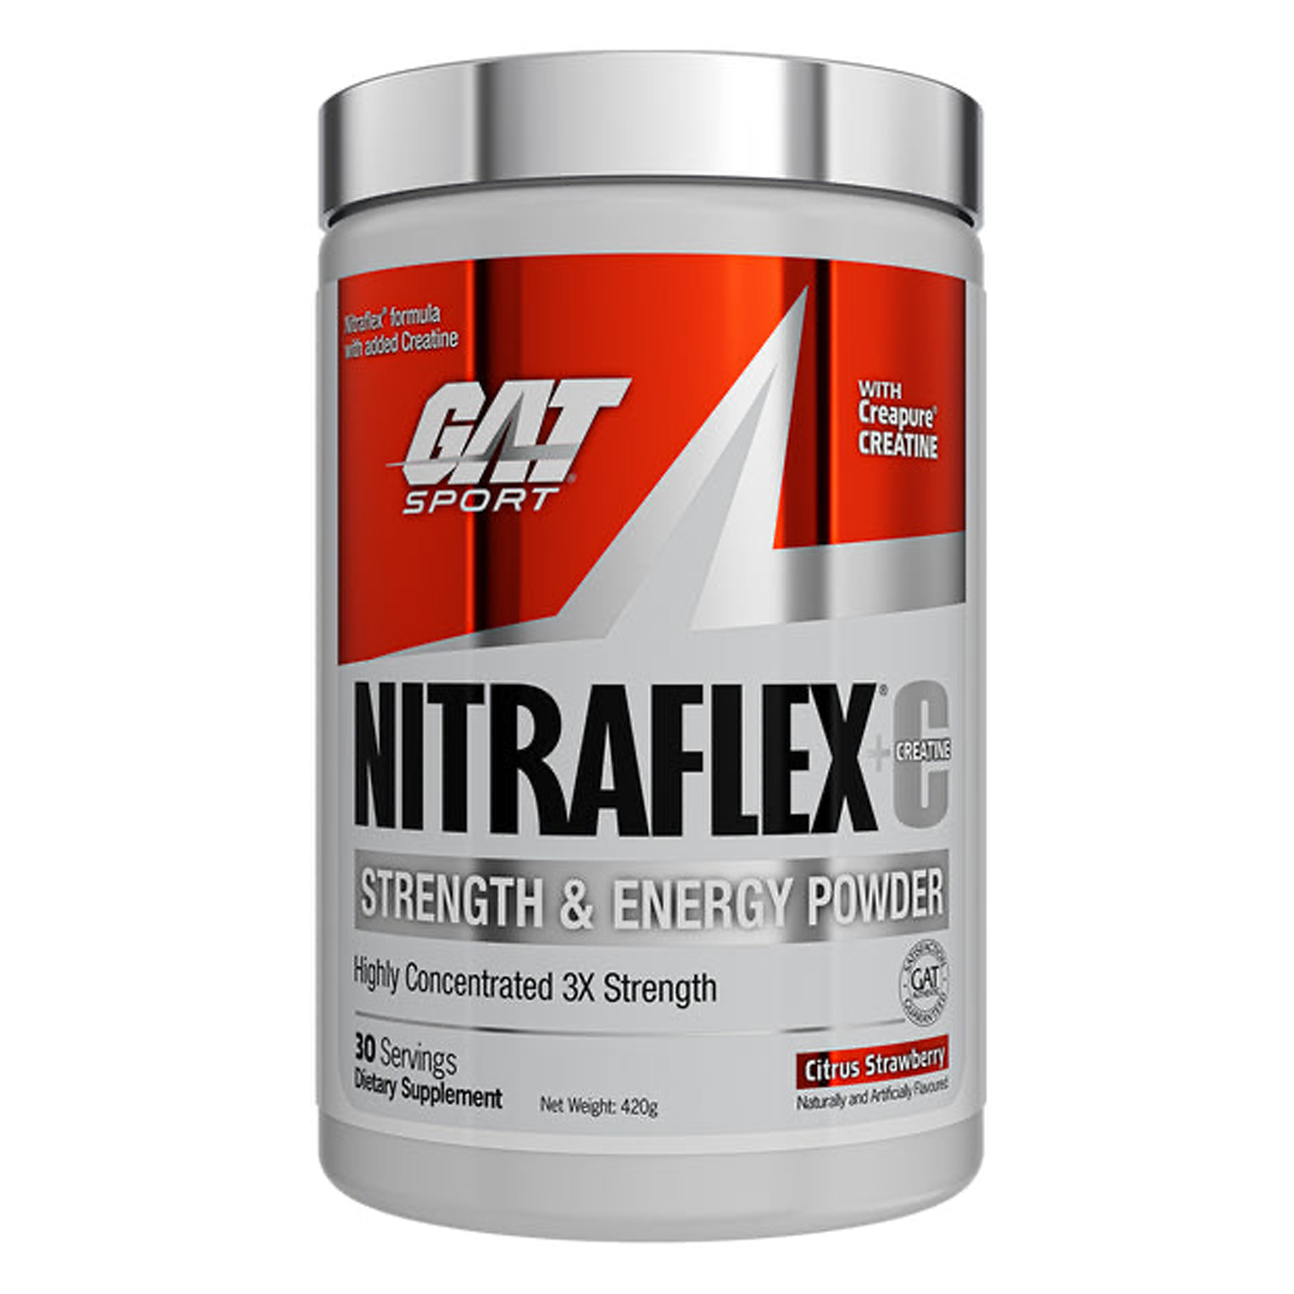 GAT Sport Nitraflex+C Pre-Workout 30 Serves, Citrus Strawberry